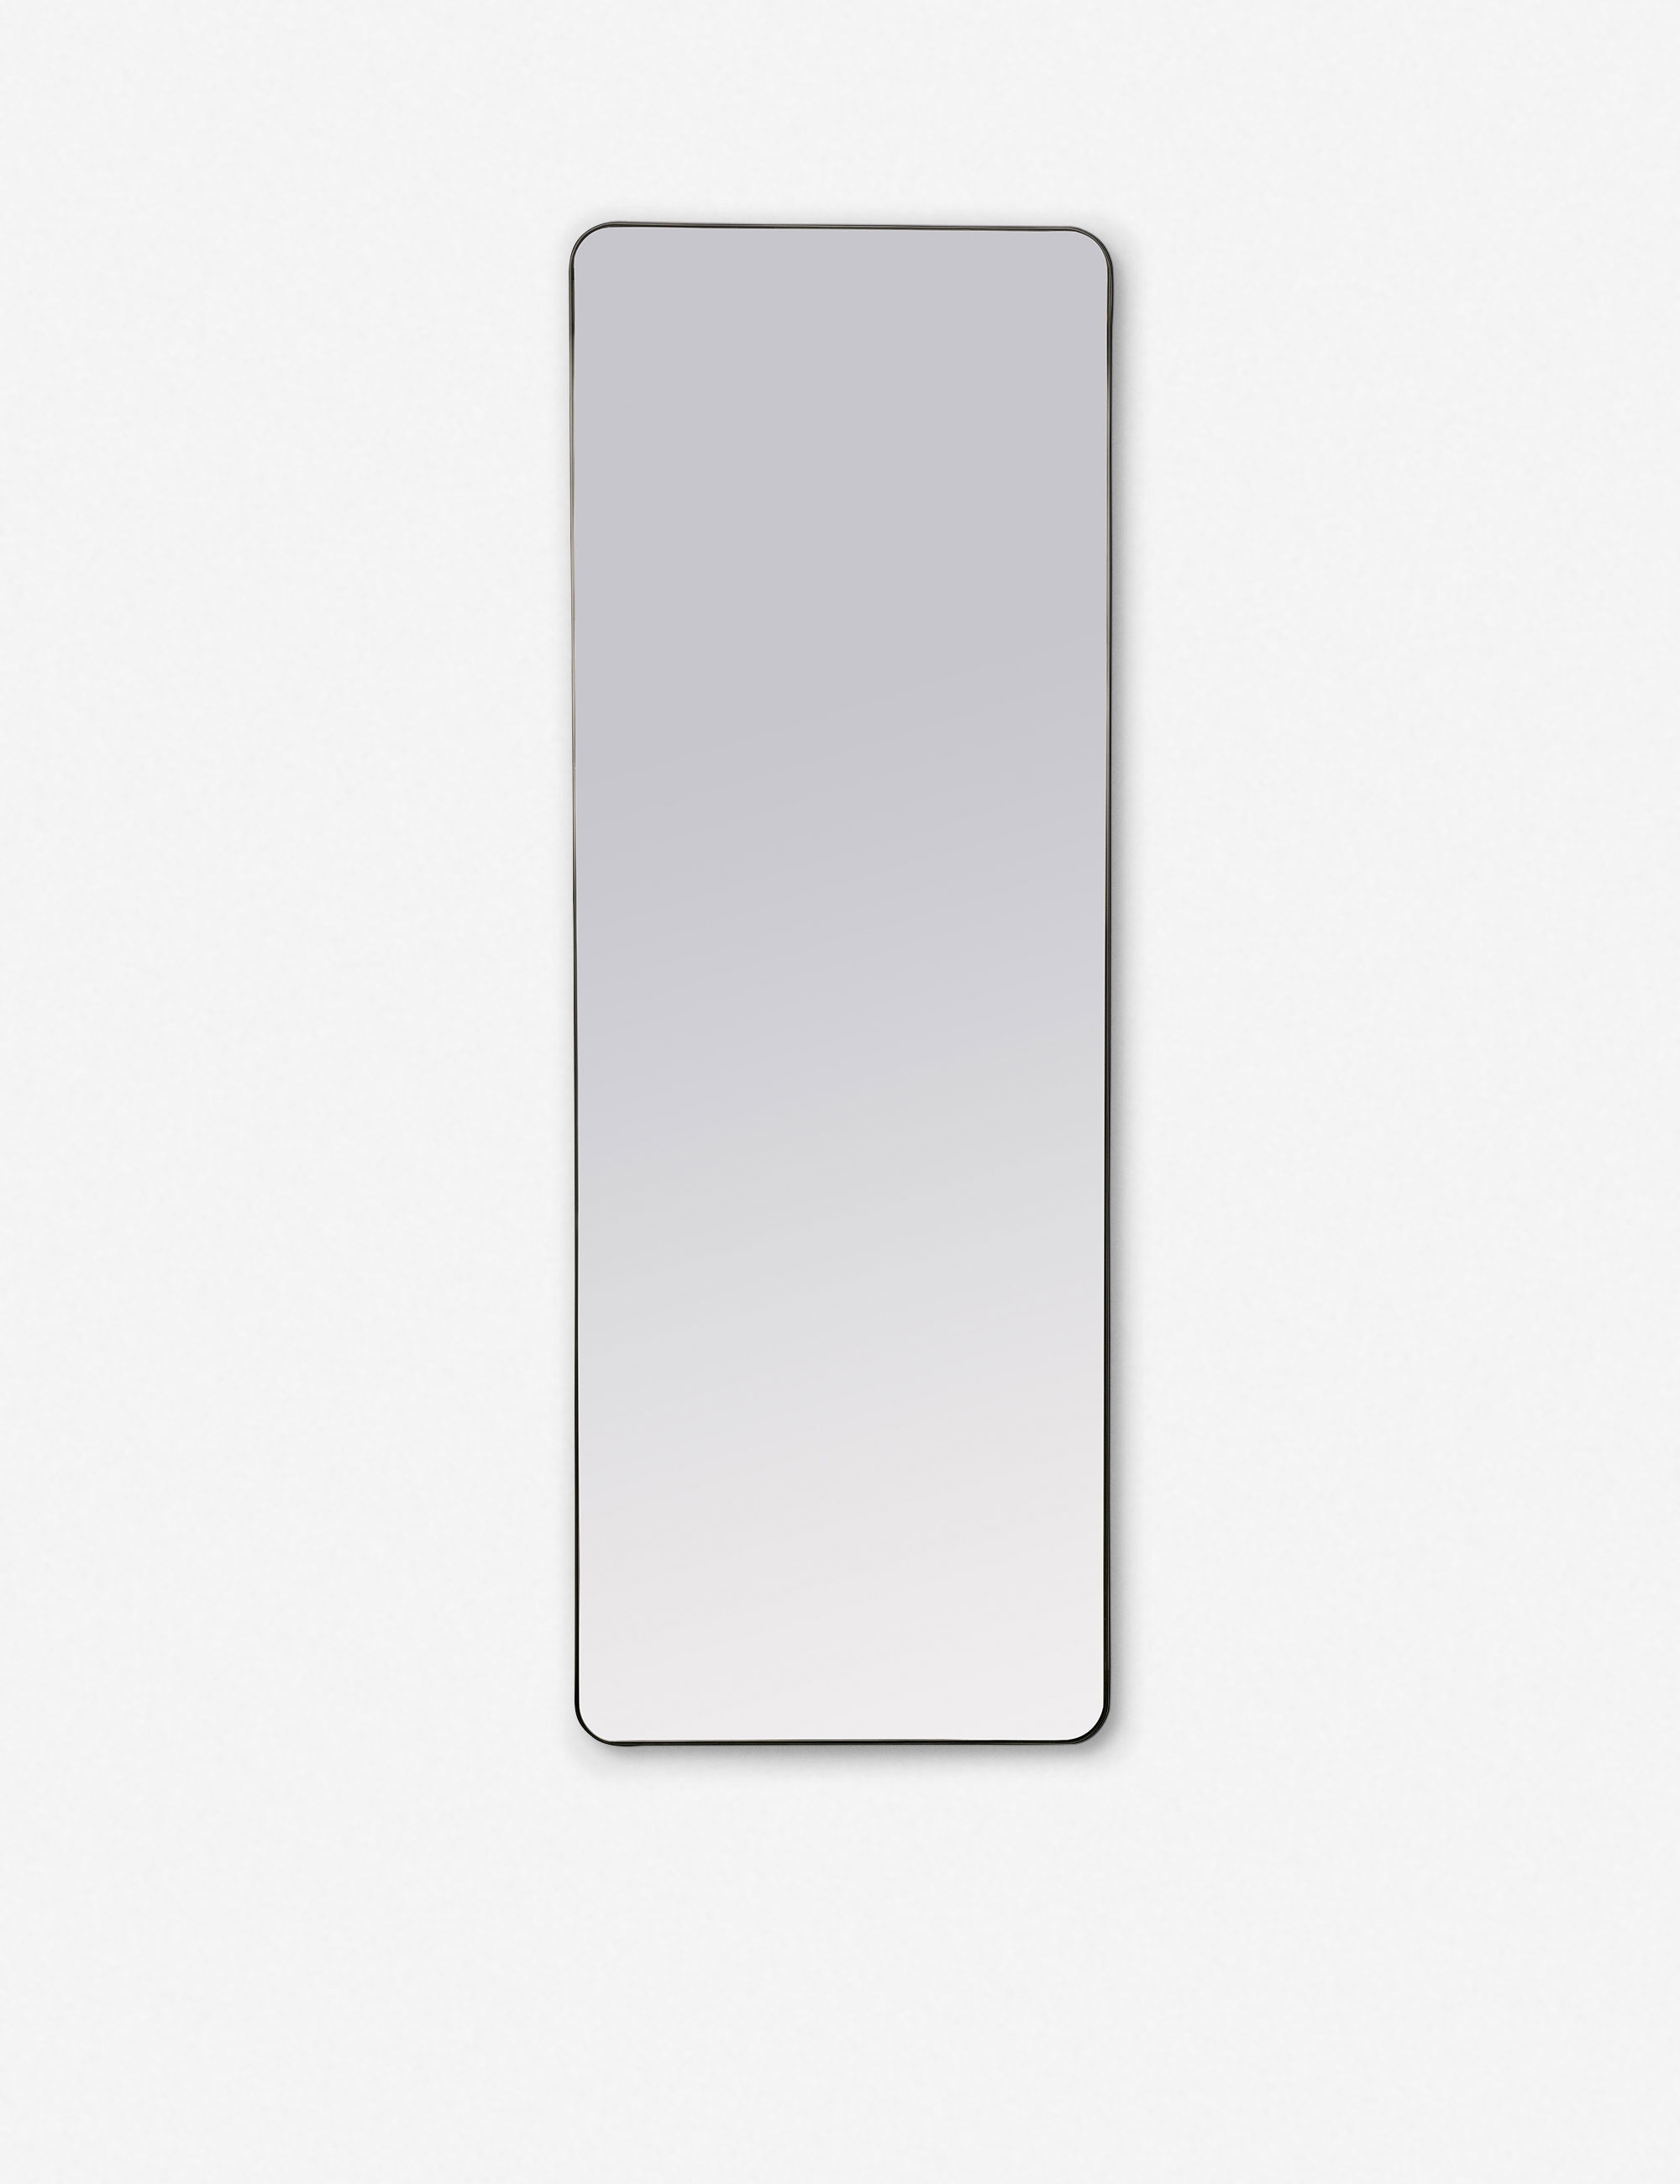 Emjay Full-Length Mirror, Black - Image 0